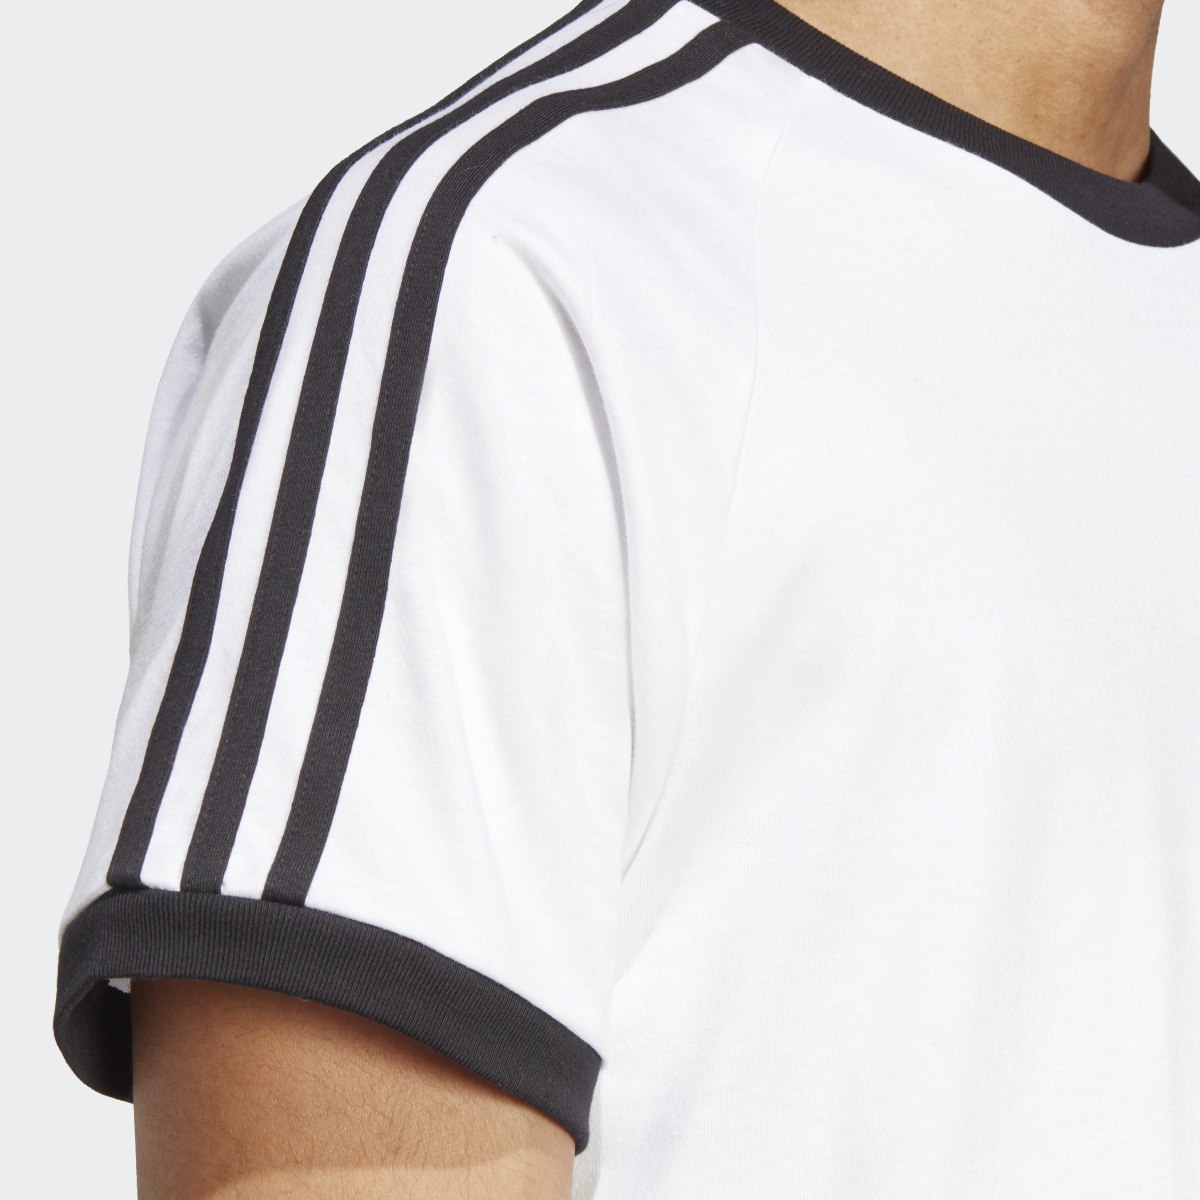 Adidas Adicolor Classics 3-Stripes T-Shirt. 7